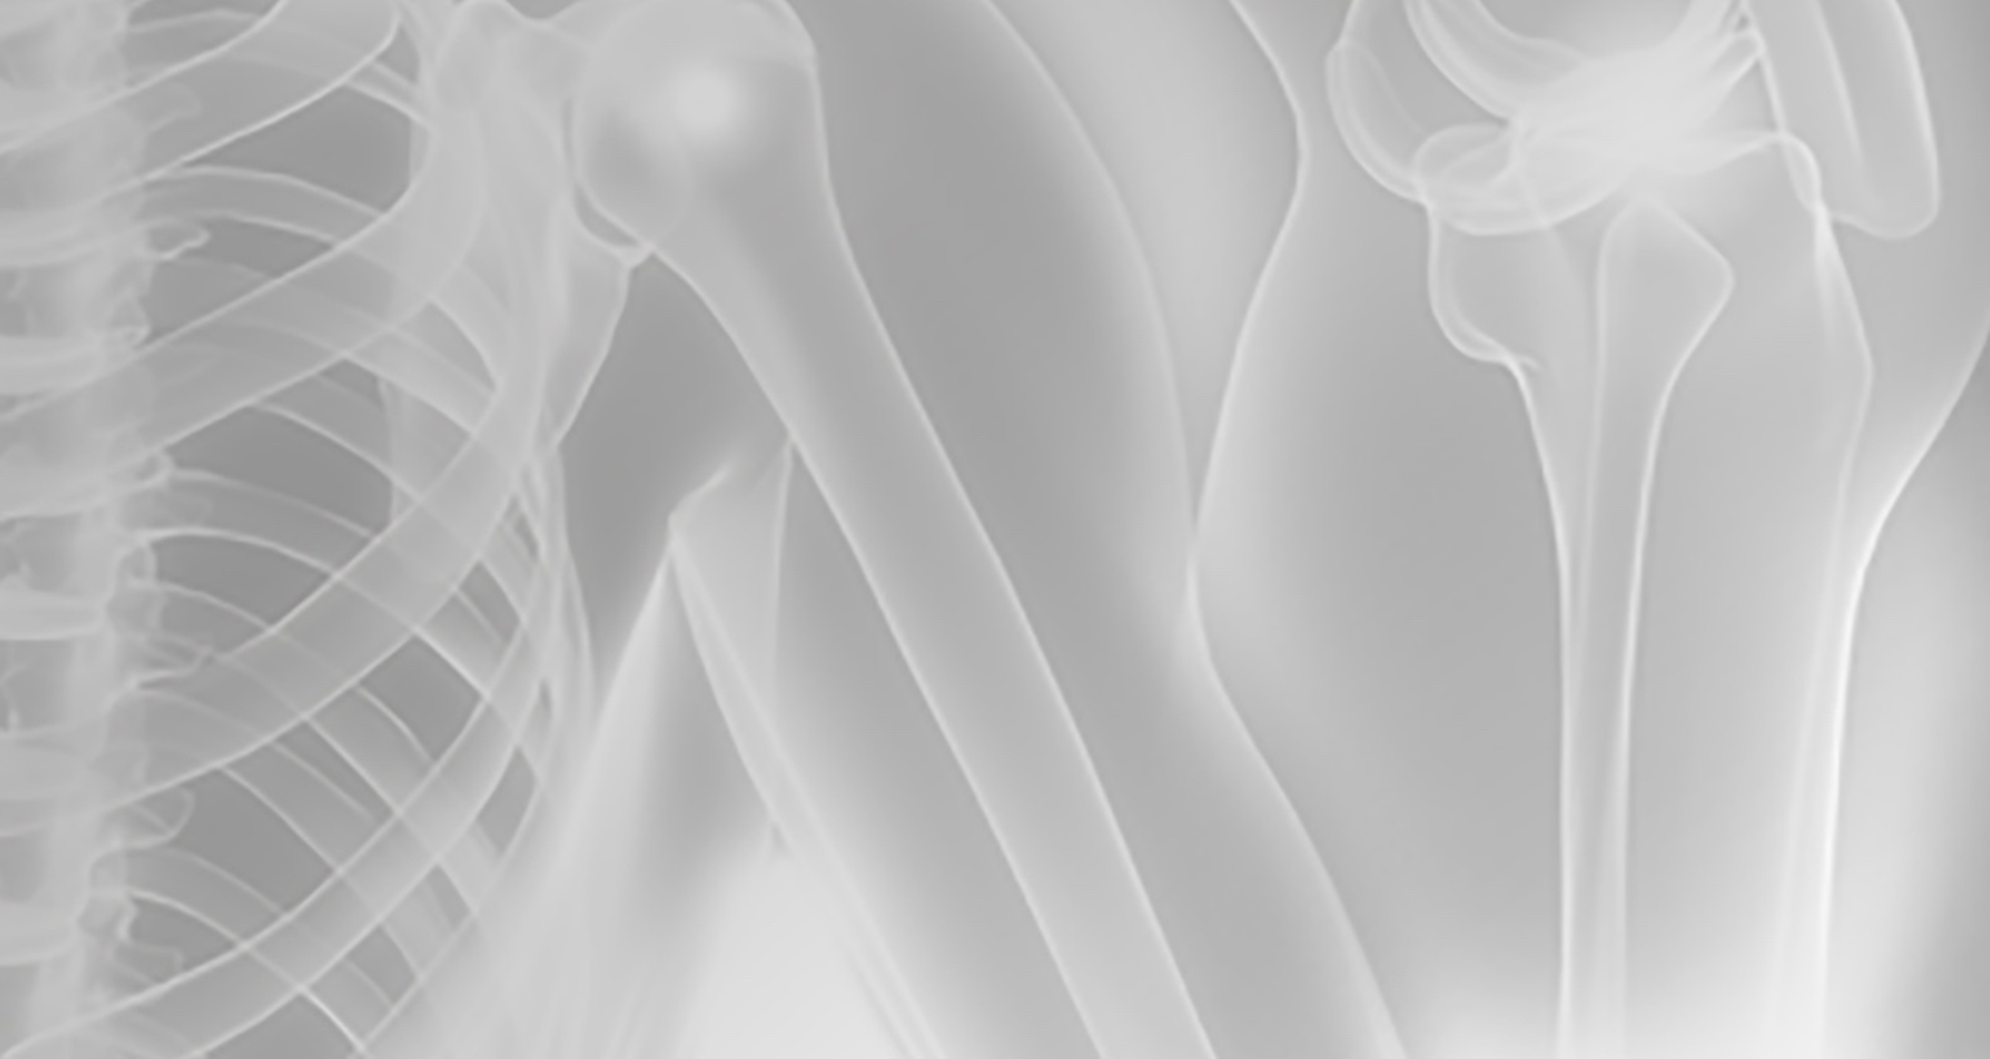 X-ray of torso and shoulder